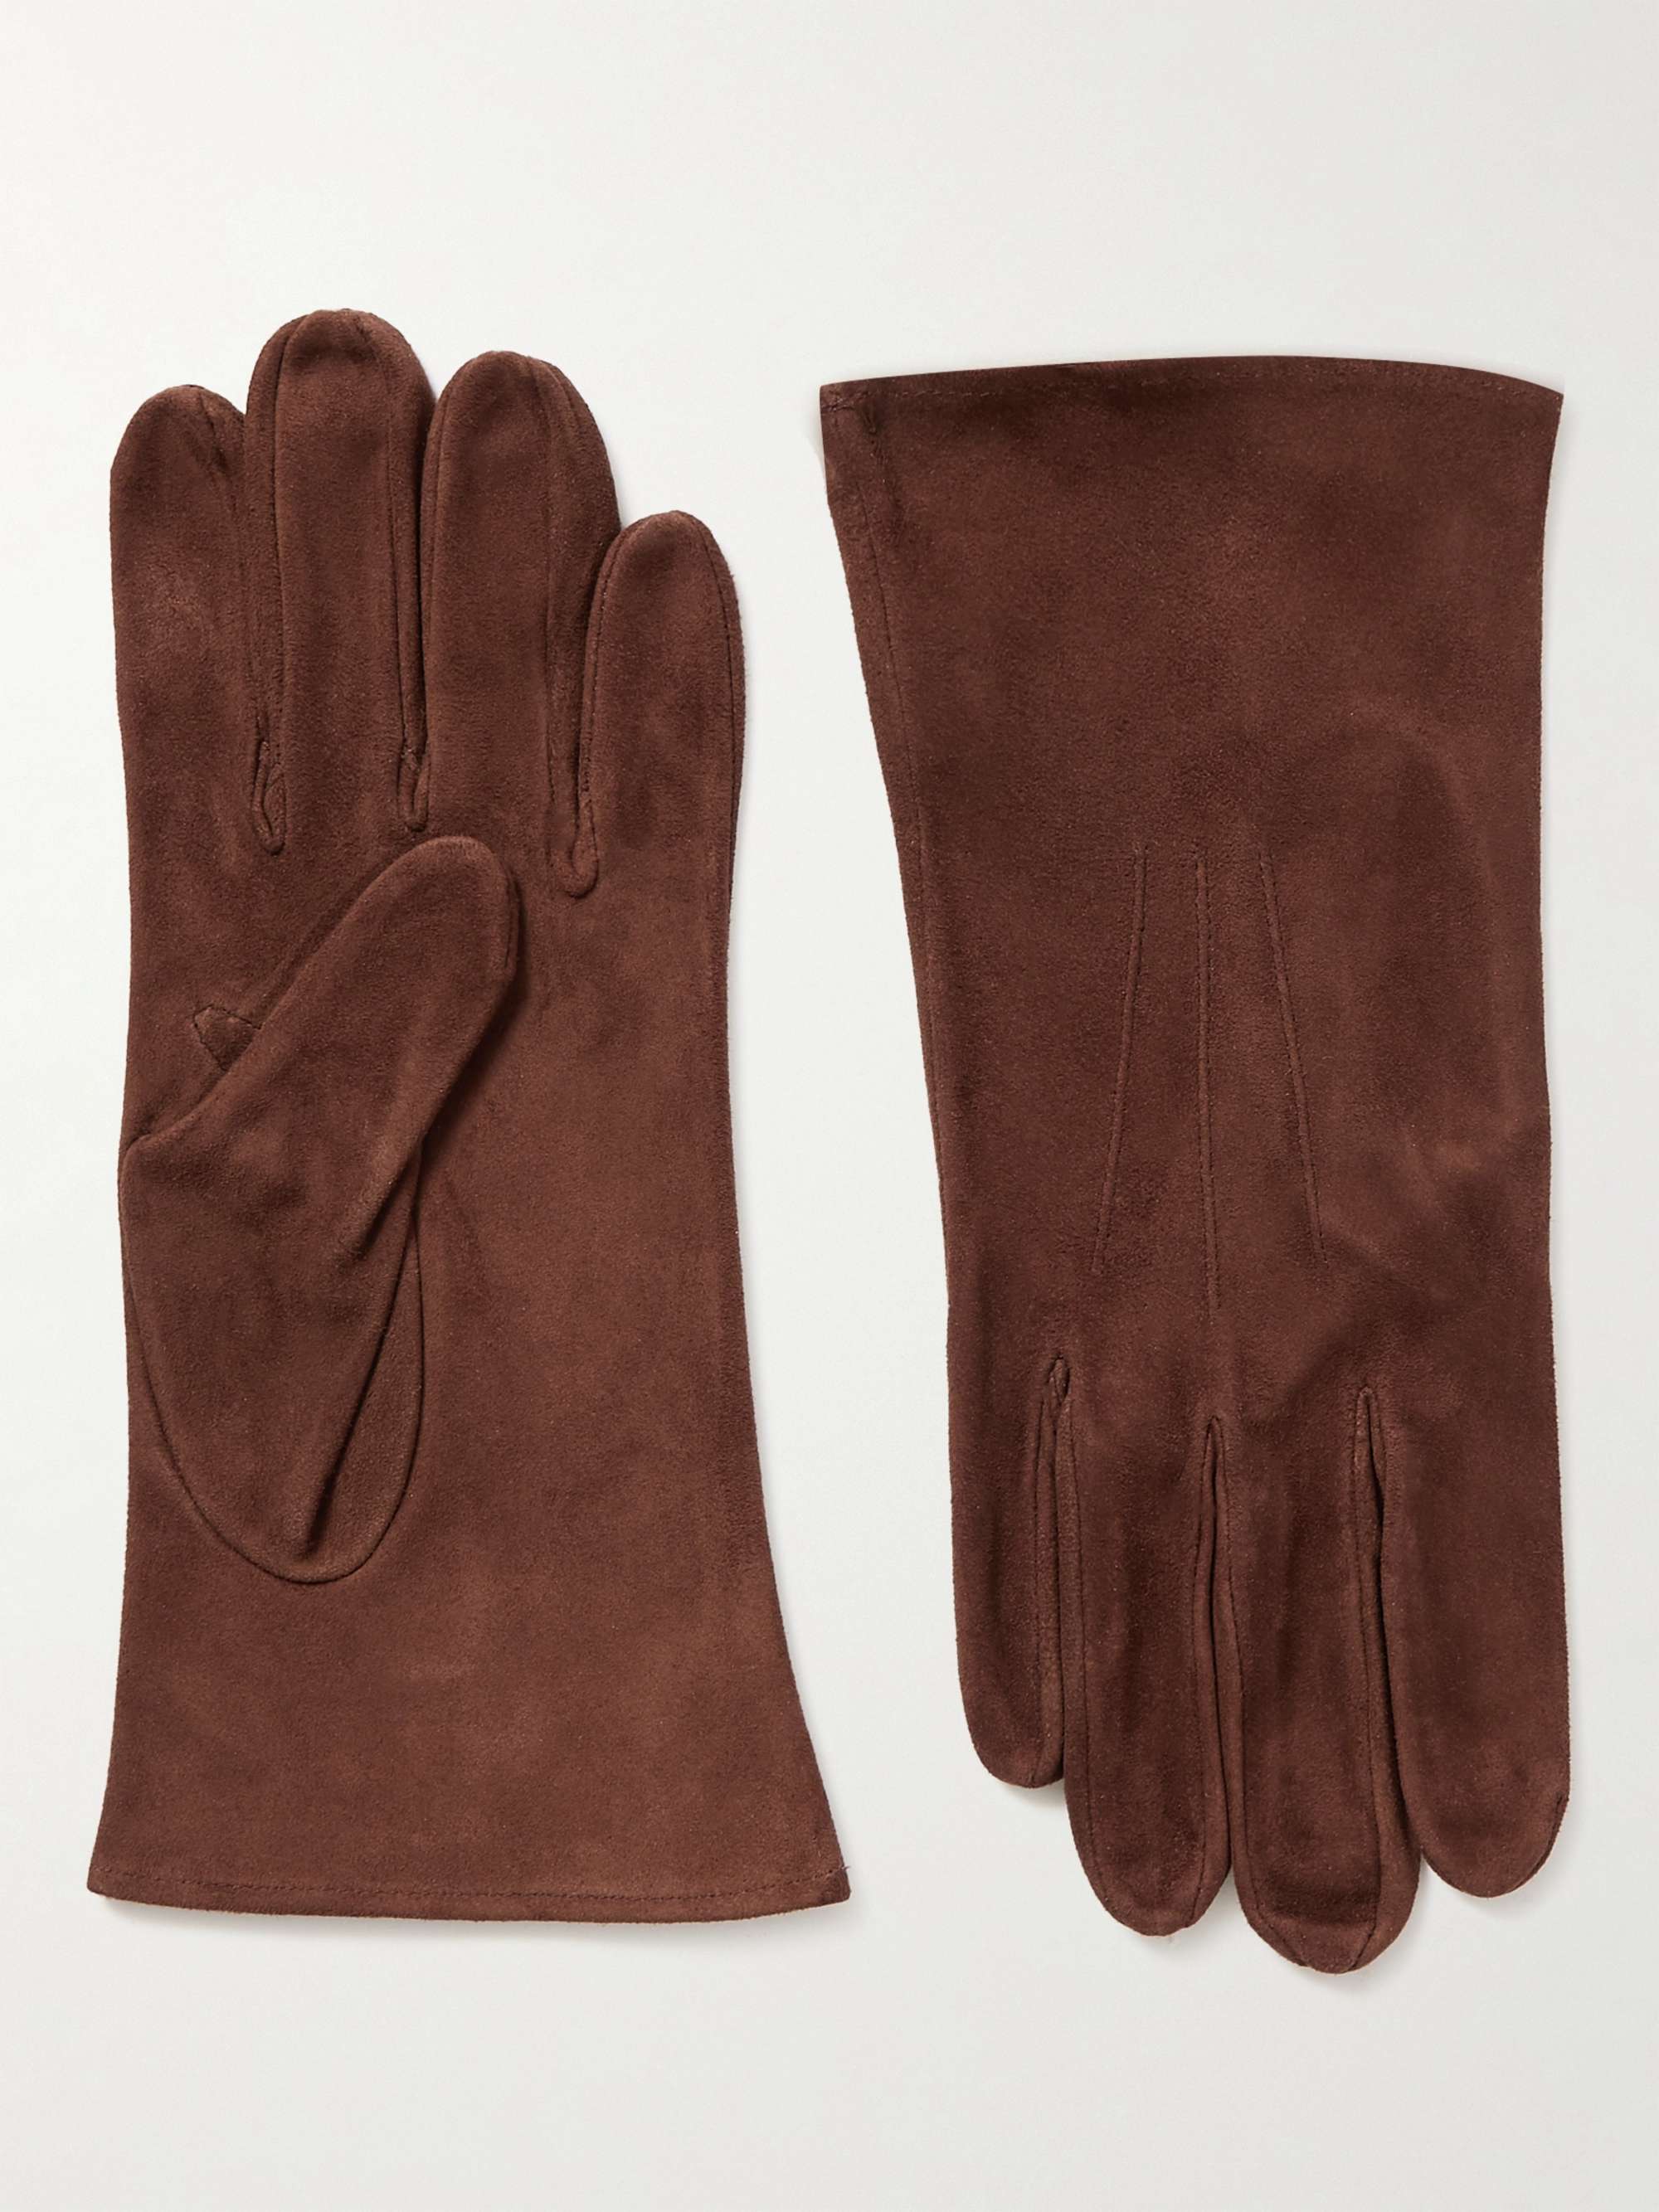 ANDERSON & SHEPPARD Suede Gloves